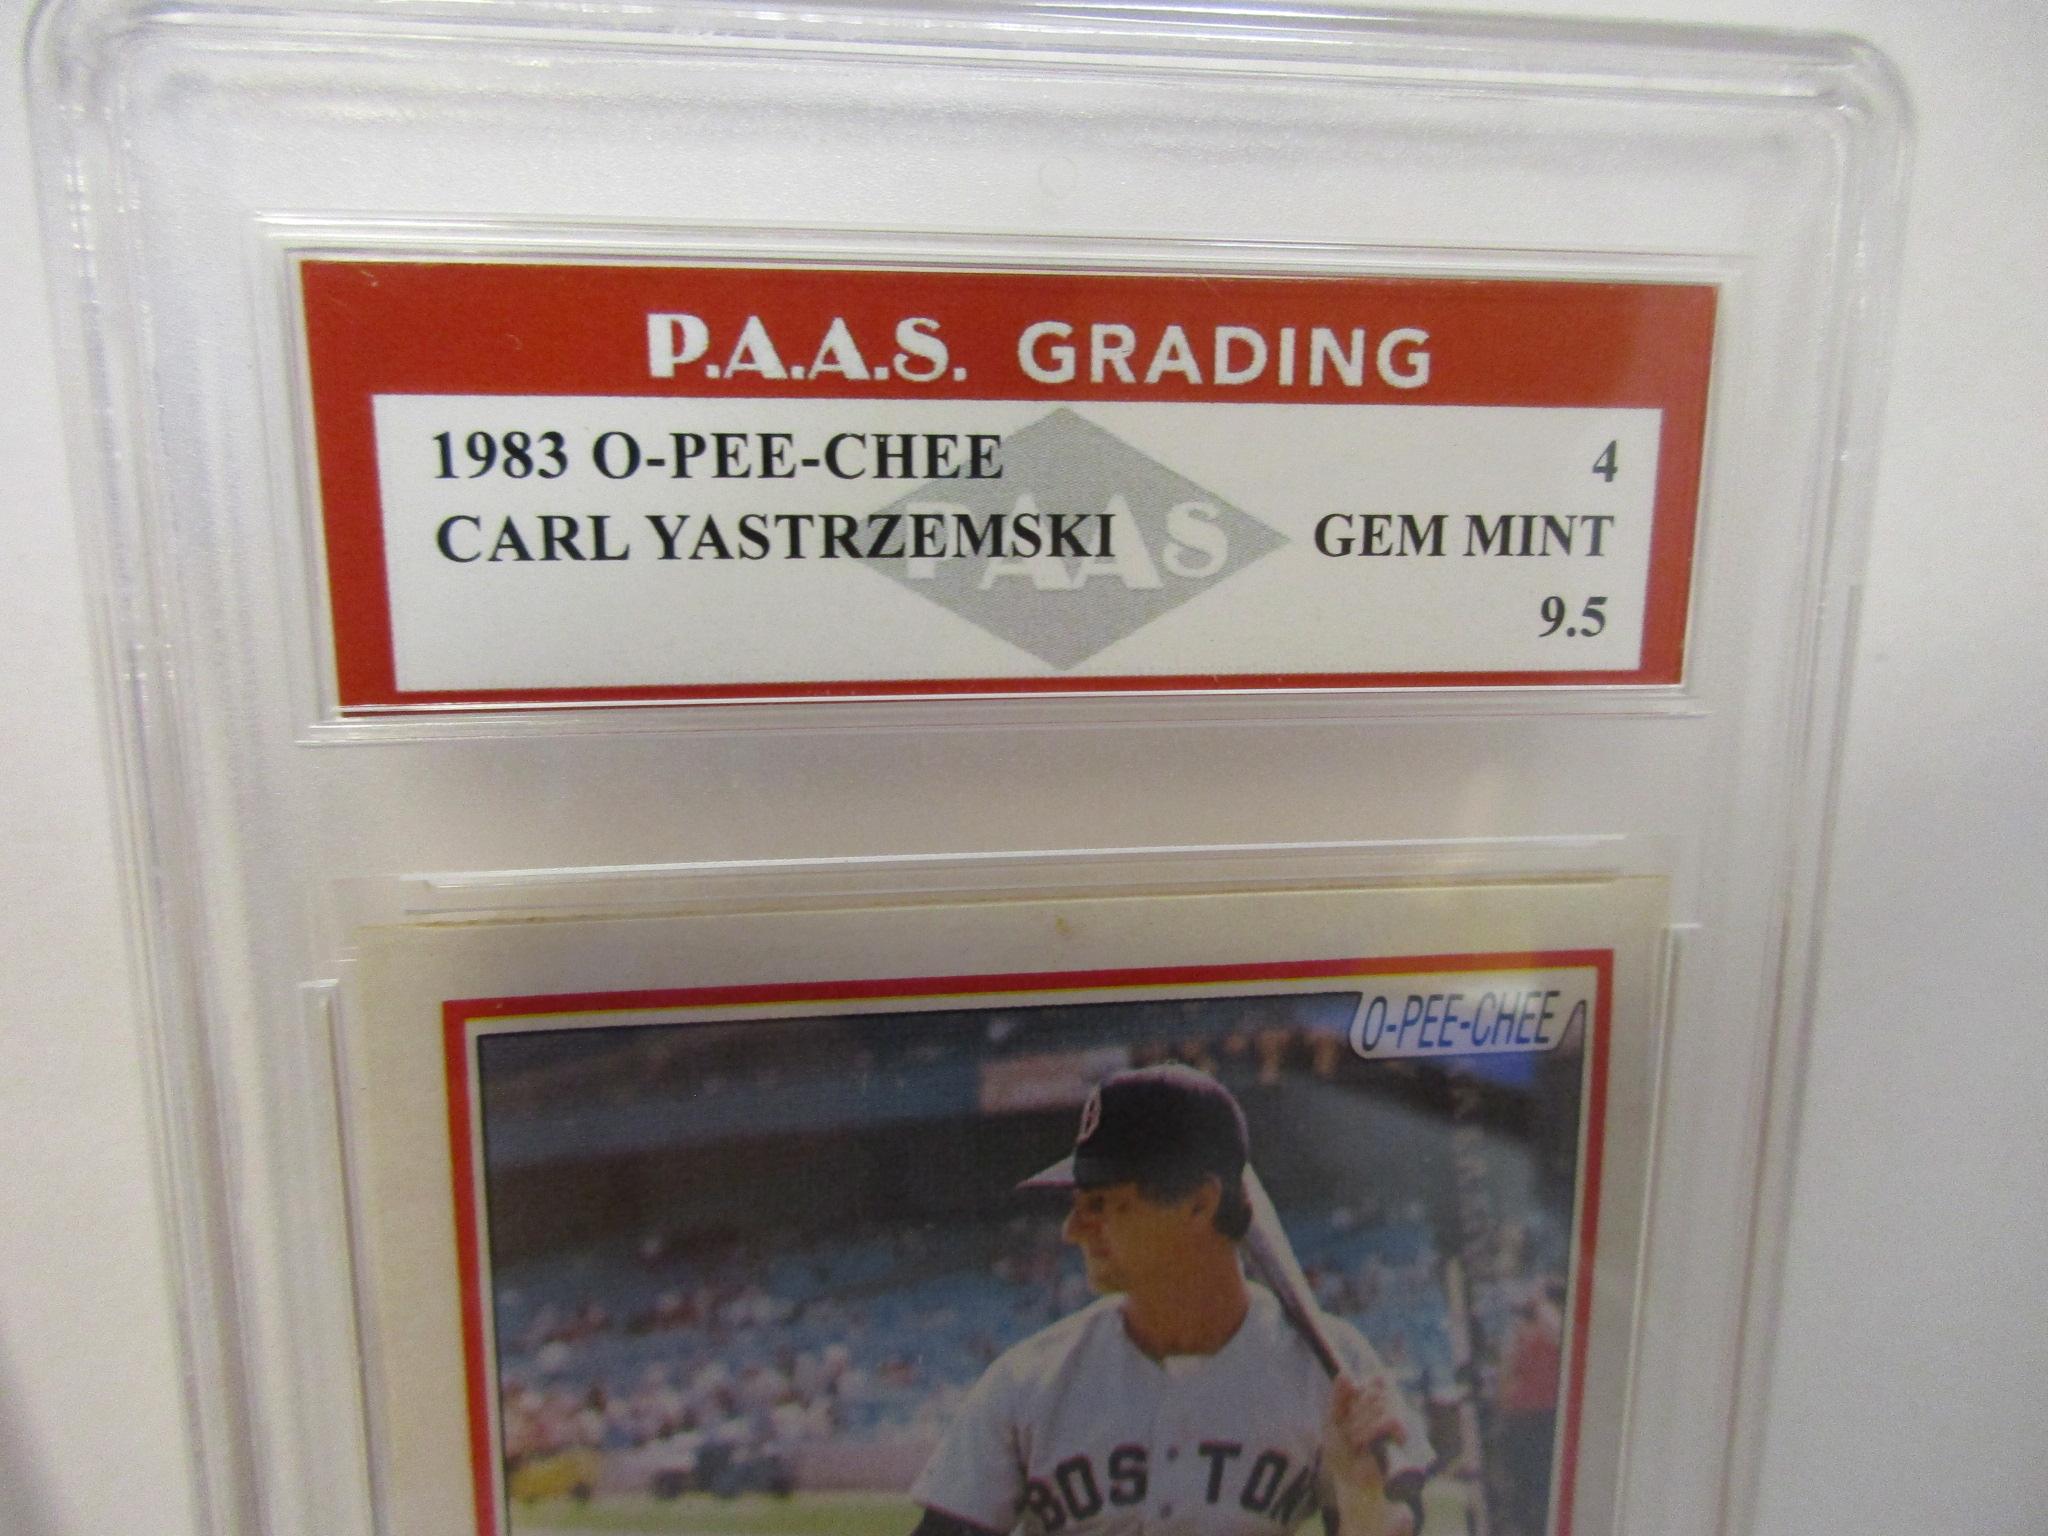 Carl Yastrzemski Red Sox 1983 O-Pee-Chee #4 graded PAAS Gem Mint 9.5